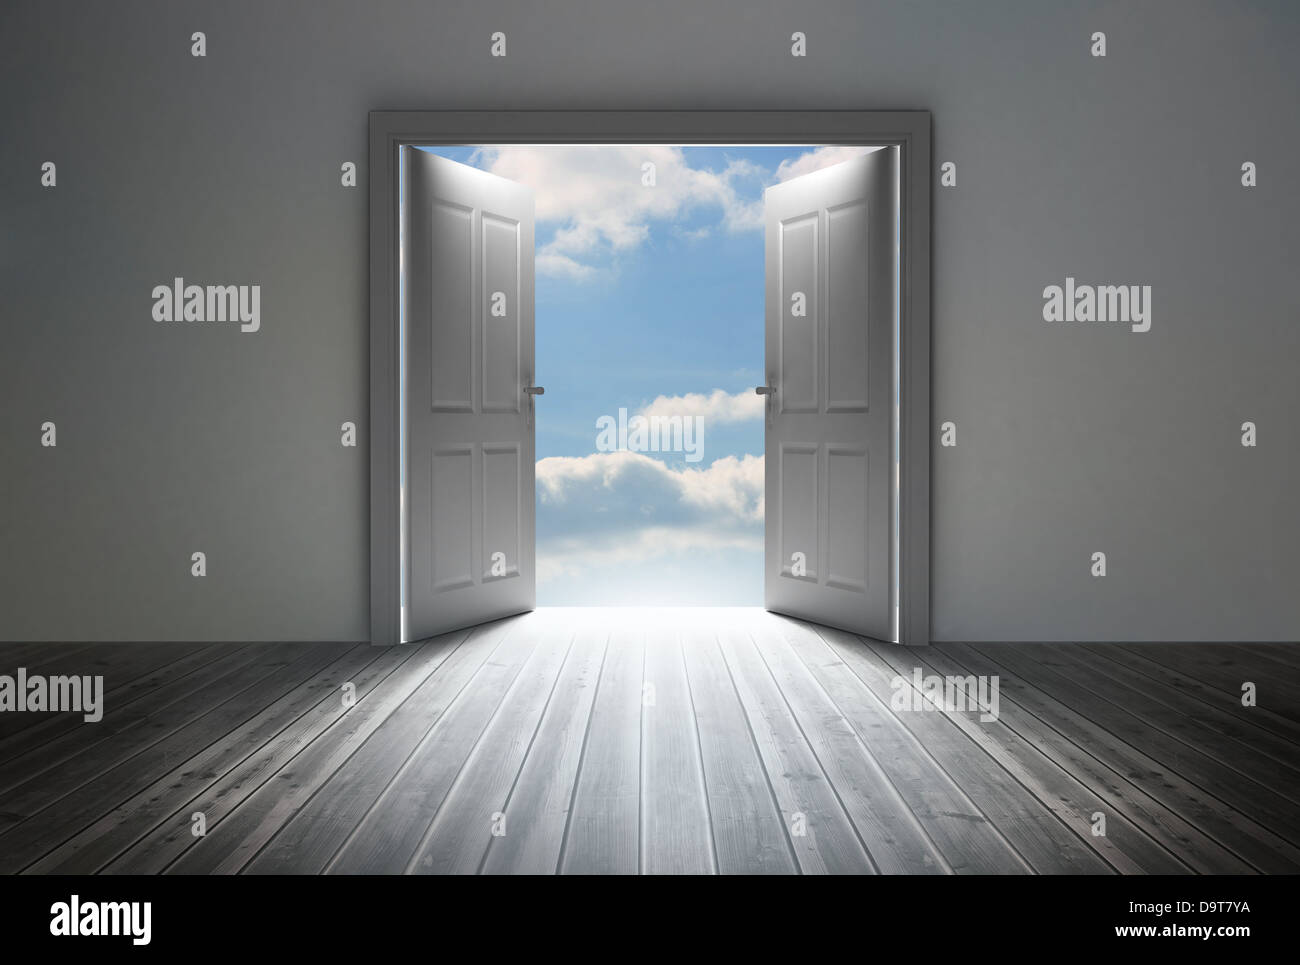 Doorway revealing bright blue sky Stock Photo